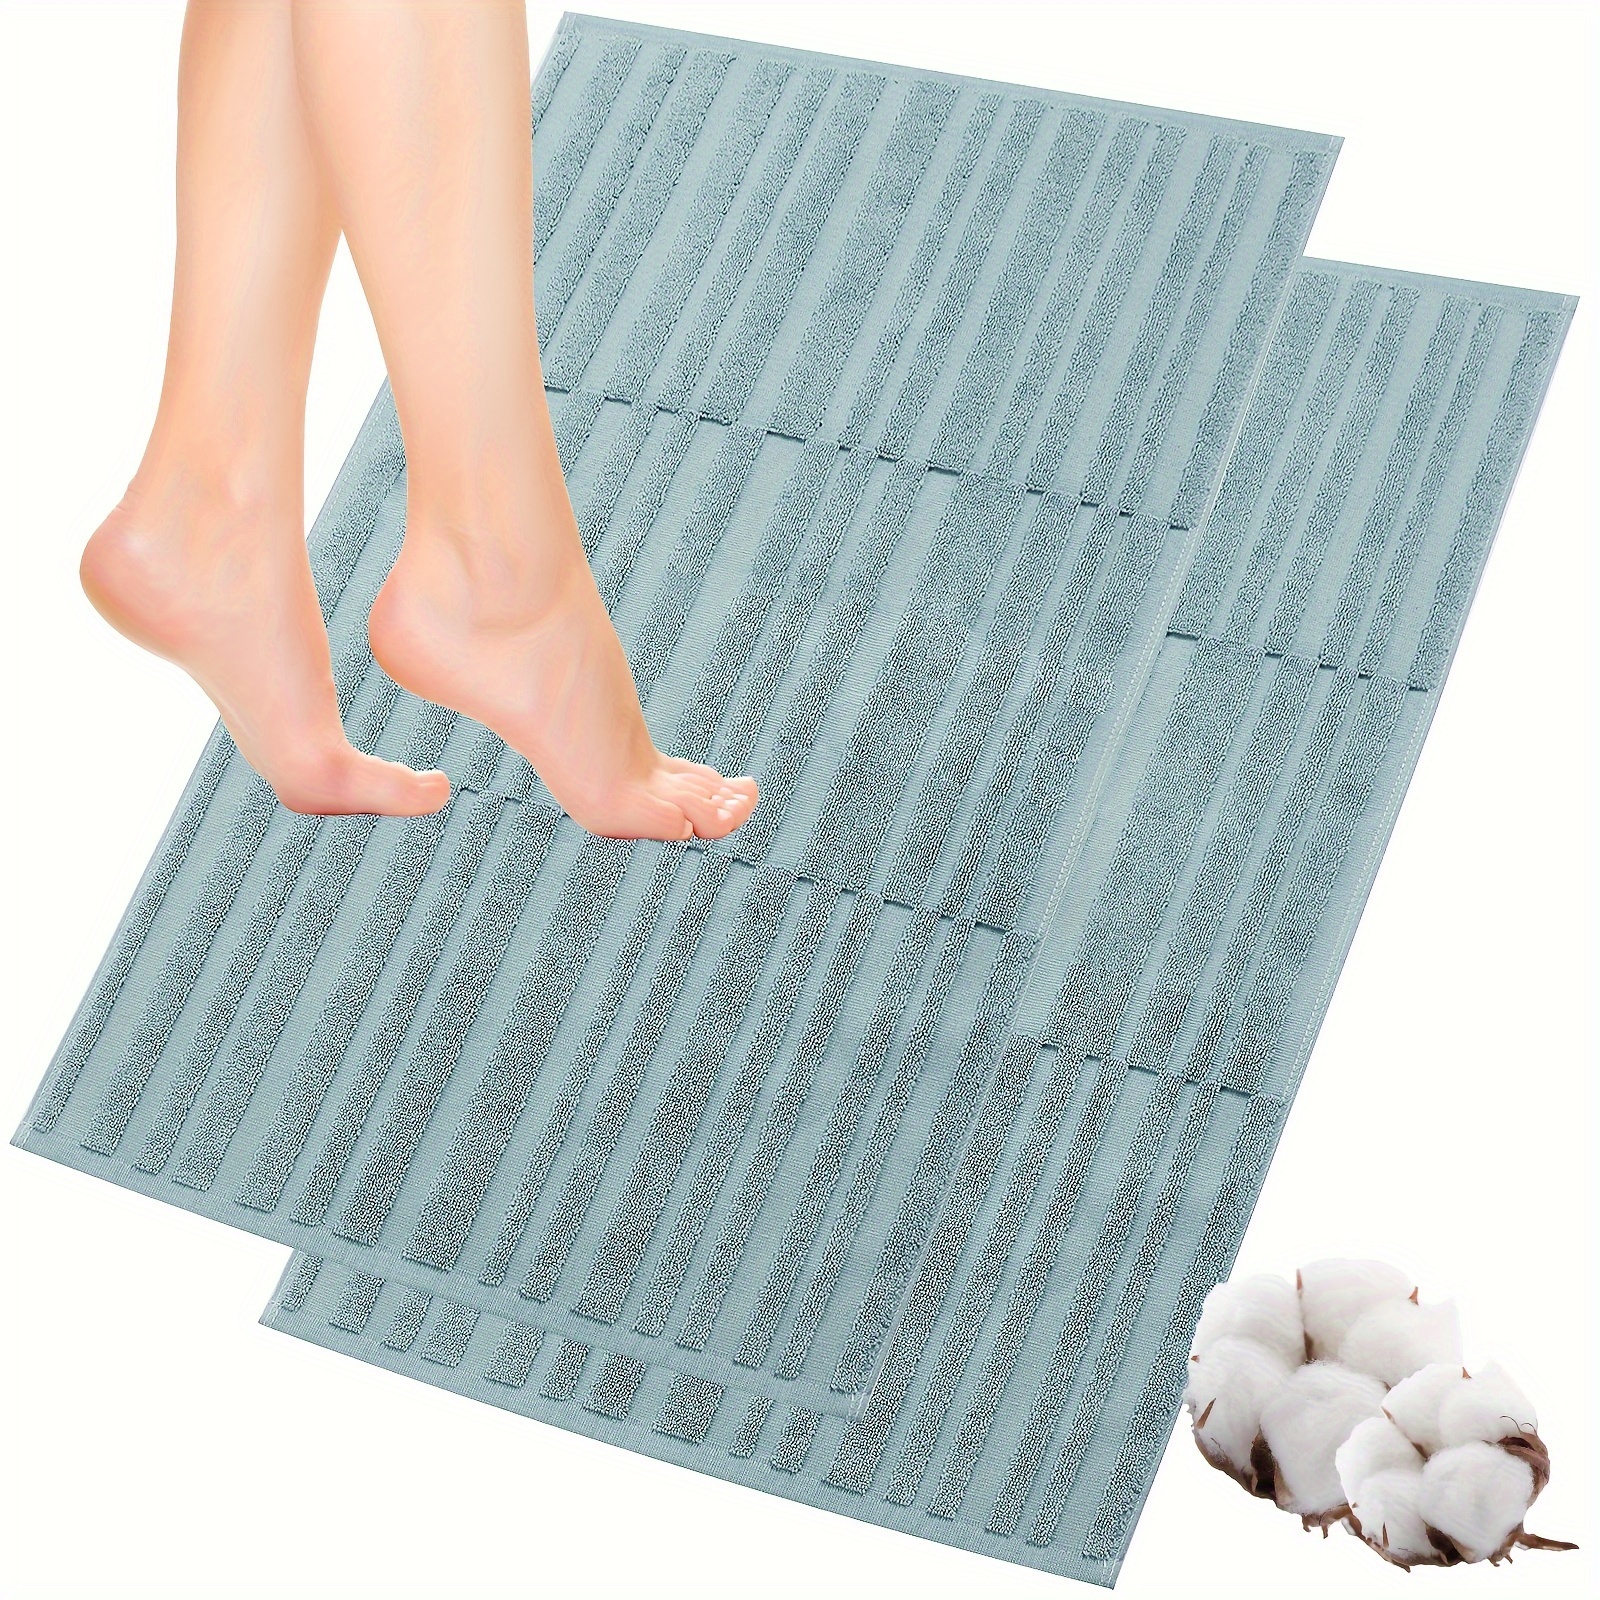 

Semaxe 2pcs Cotton Bath Mats Floor Towels, 20"x32" Foot Mats, Shower/bathtub Non-slip Mats With Massage Effect, Washable Tub Bathmat